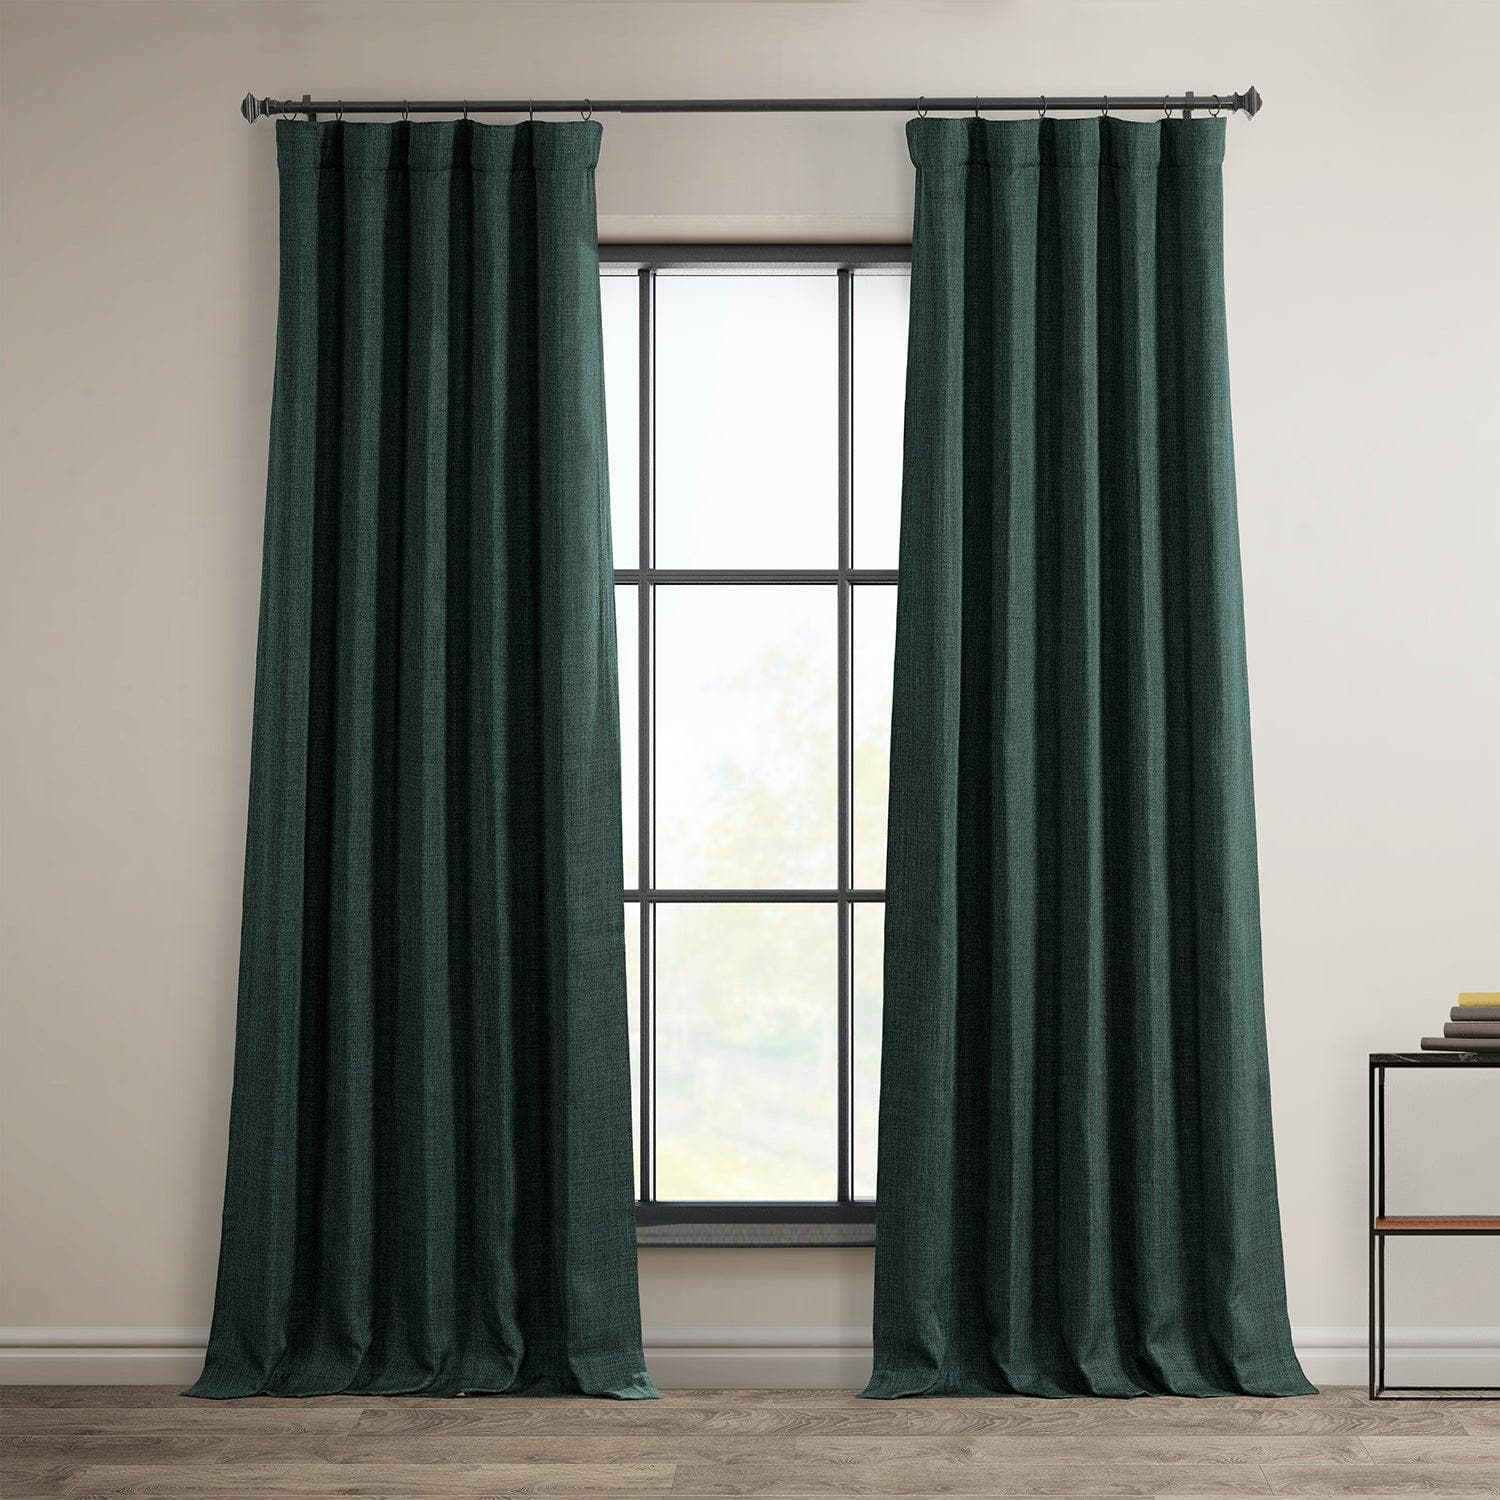 Focal Green Textured Faux Linen Room Darkening Curtain